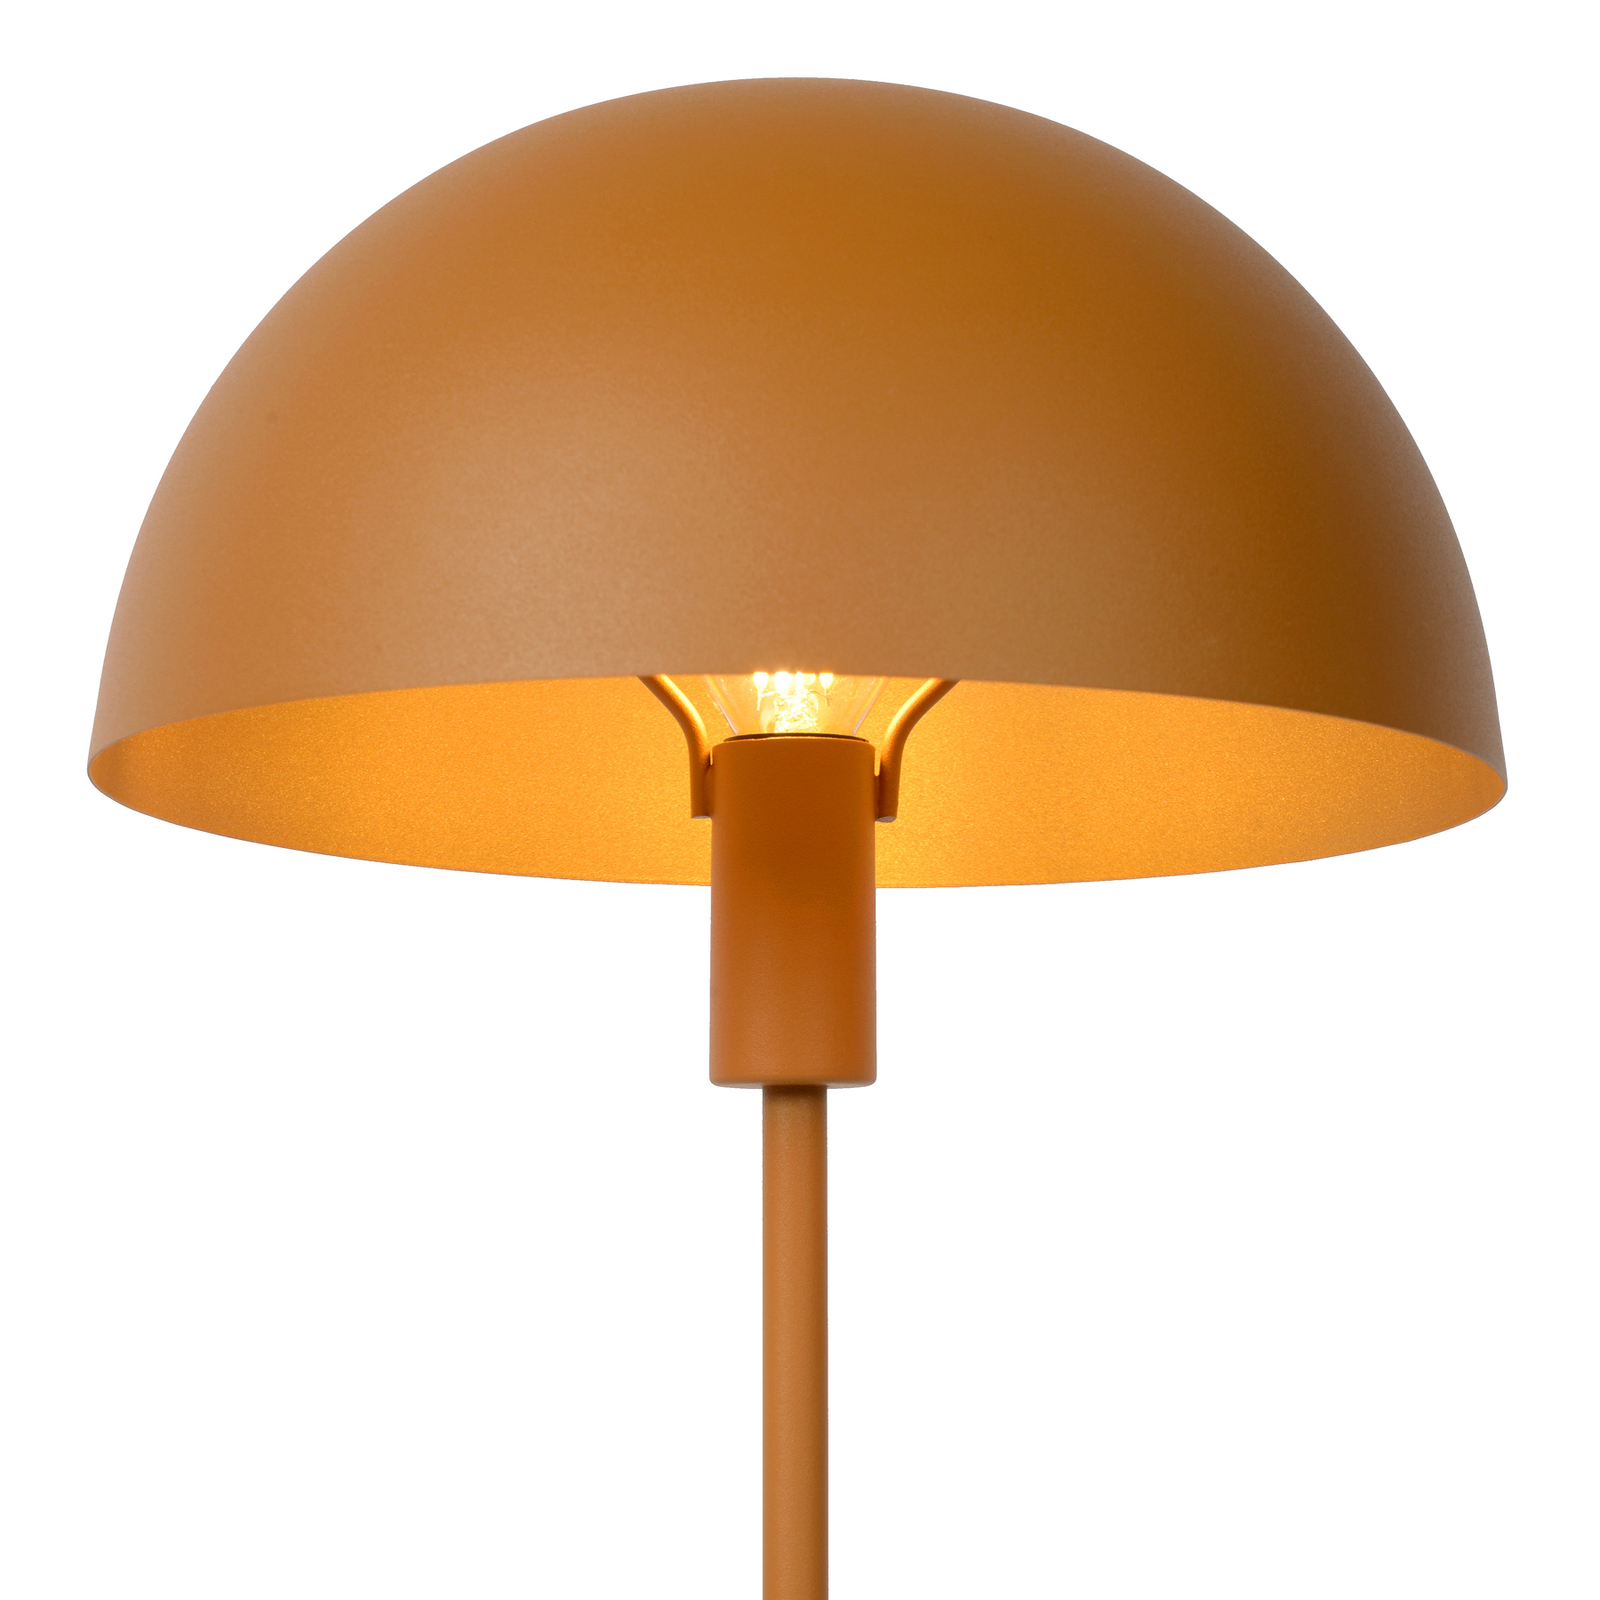 Stalen tafellamp Siemon, Ø 25 cm, okergeel